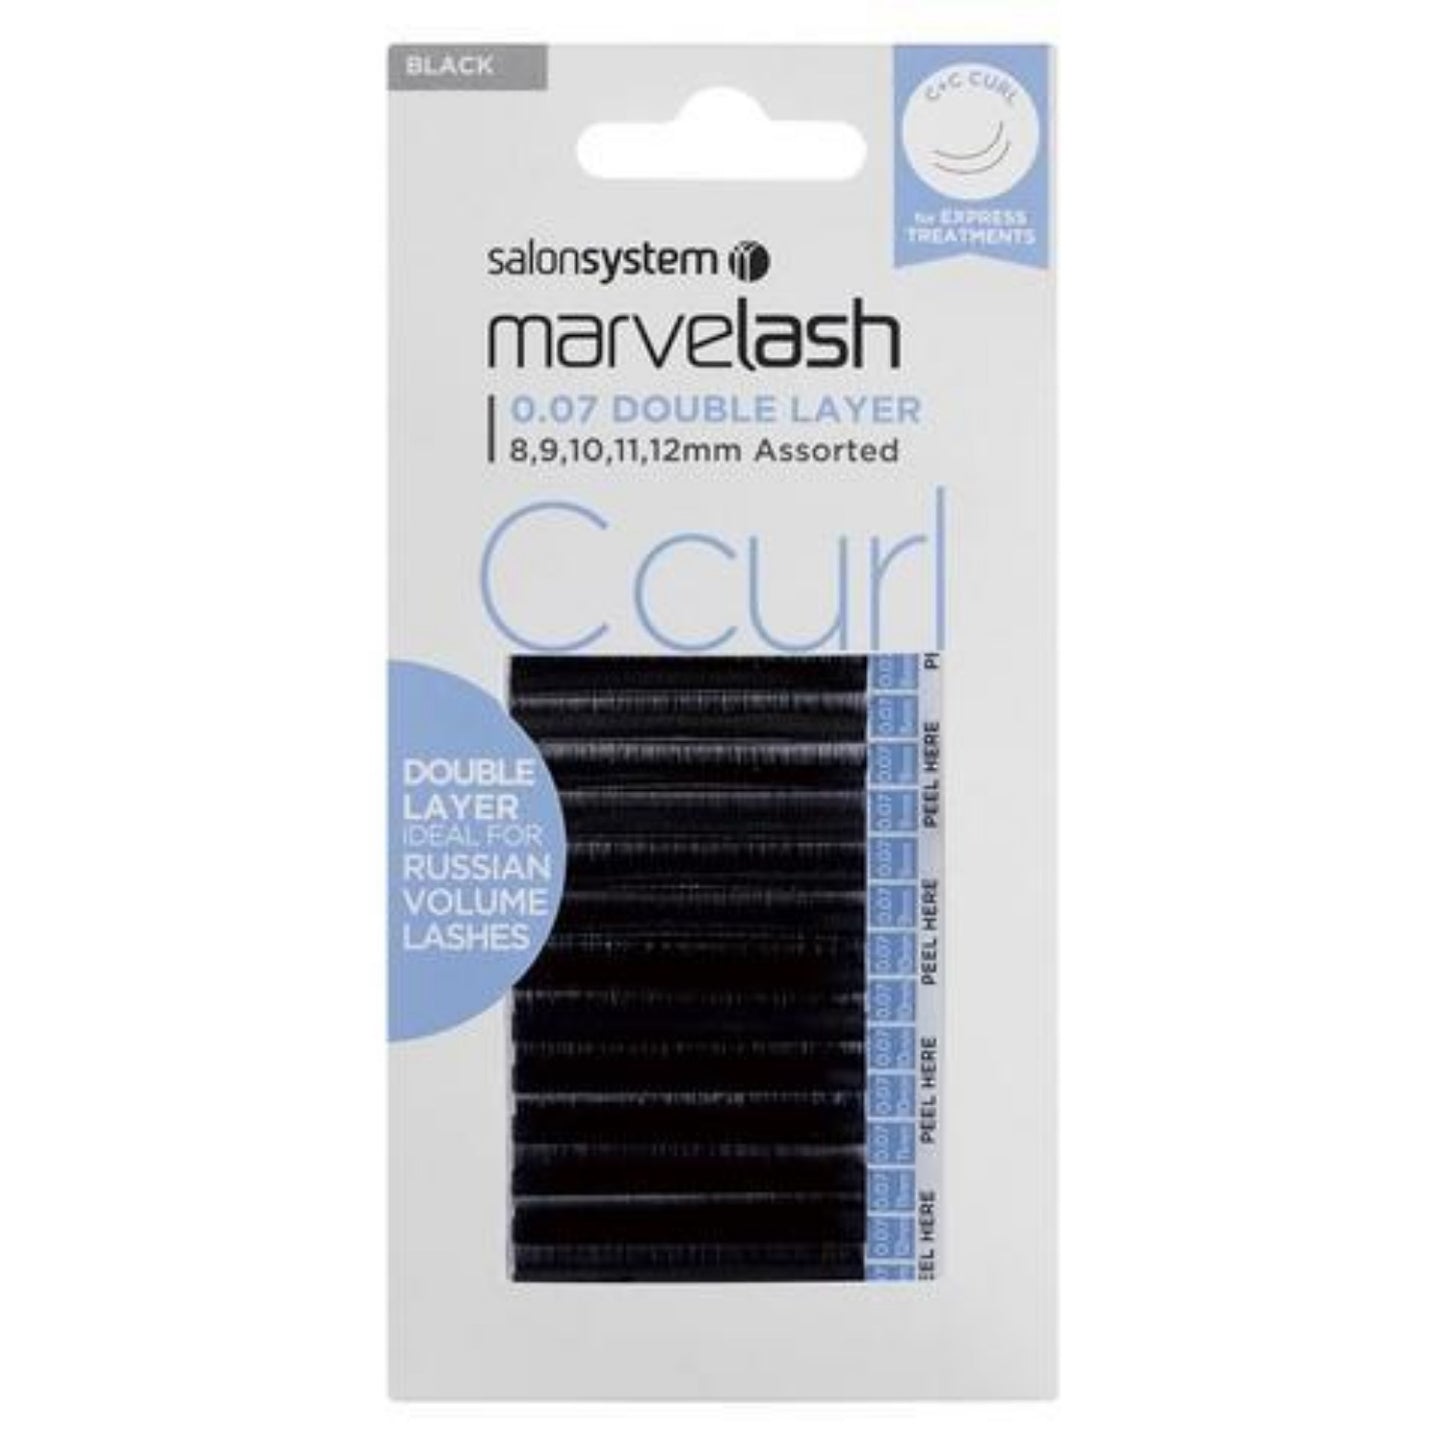 Salon System Marvelash C Curl Lashes 0.07 Double Layer, Assorted Length (8, 9, 10, 11, 12mm) False Strip Lashes